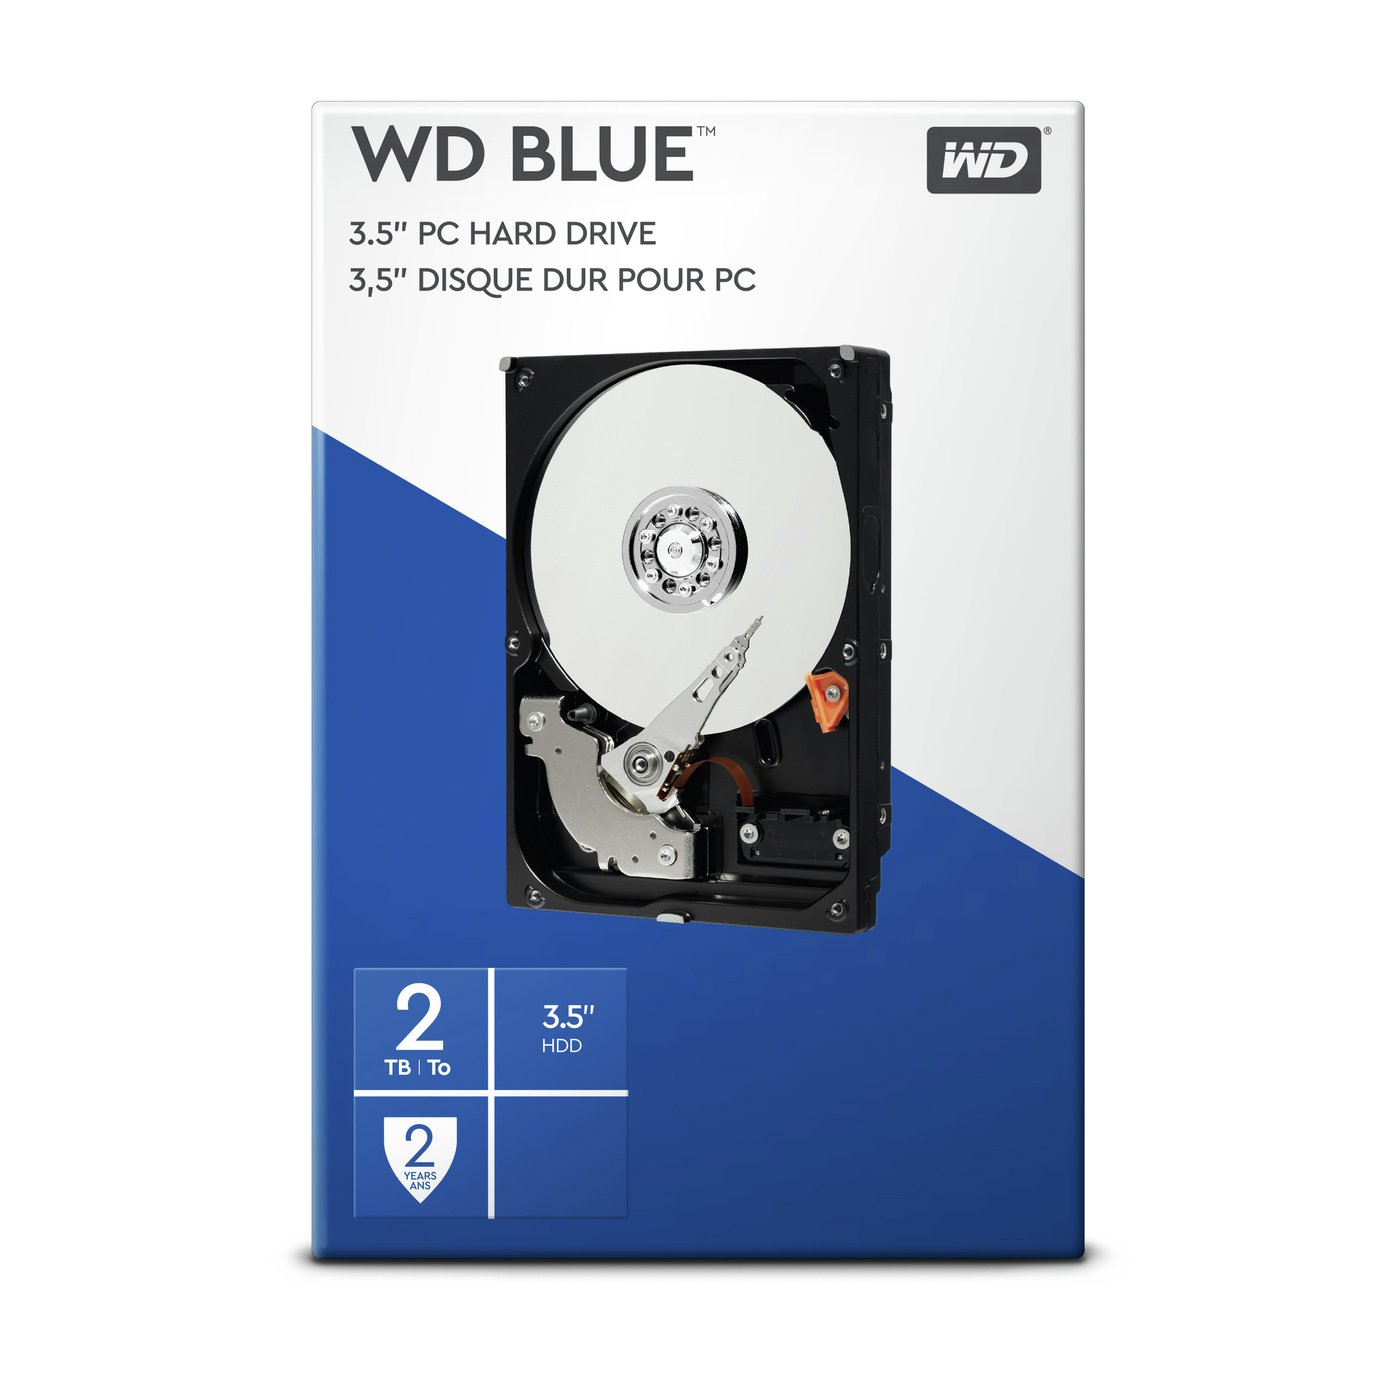 WD Blue 2TB Desktop Hard Drive Review